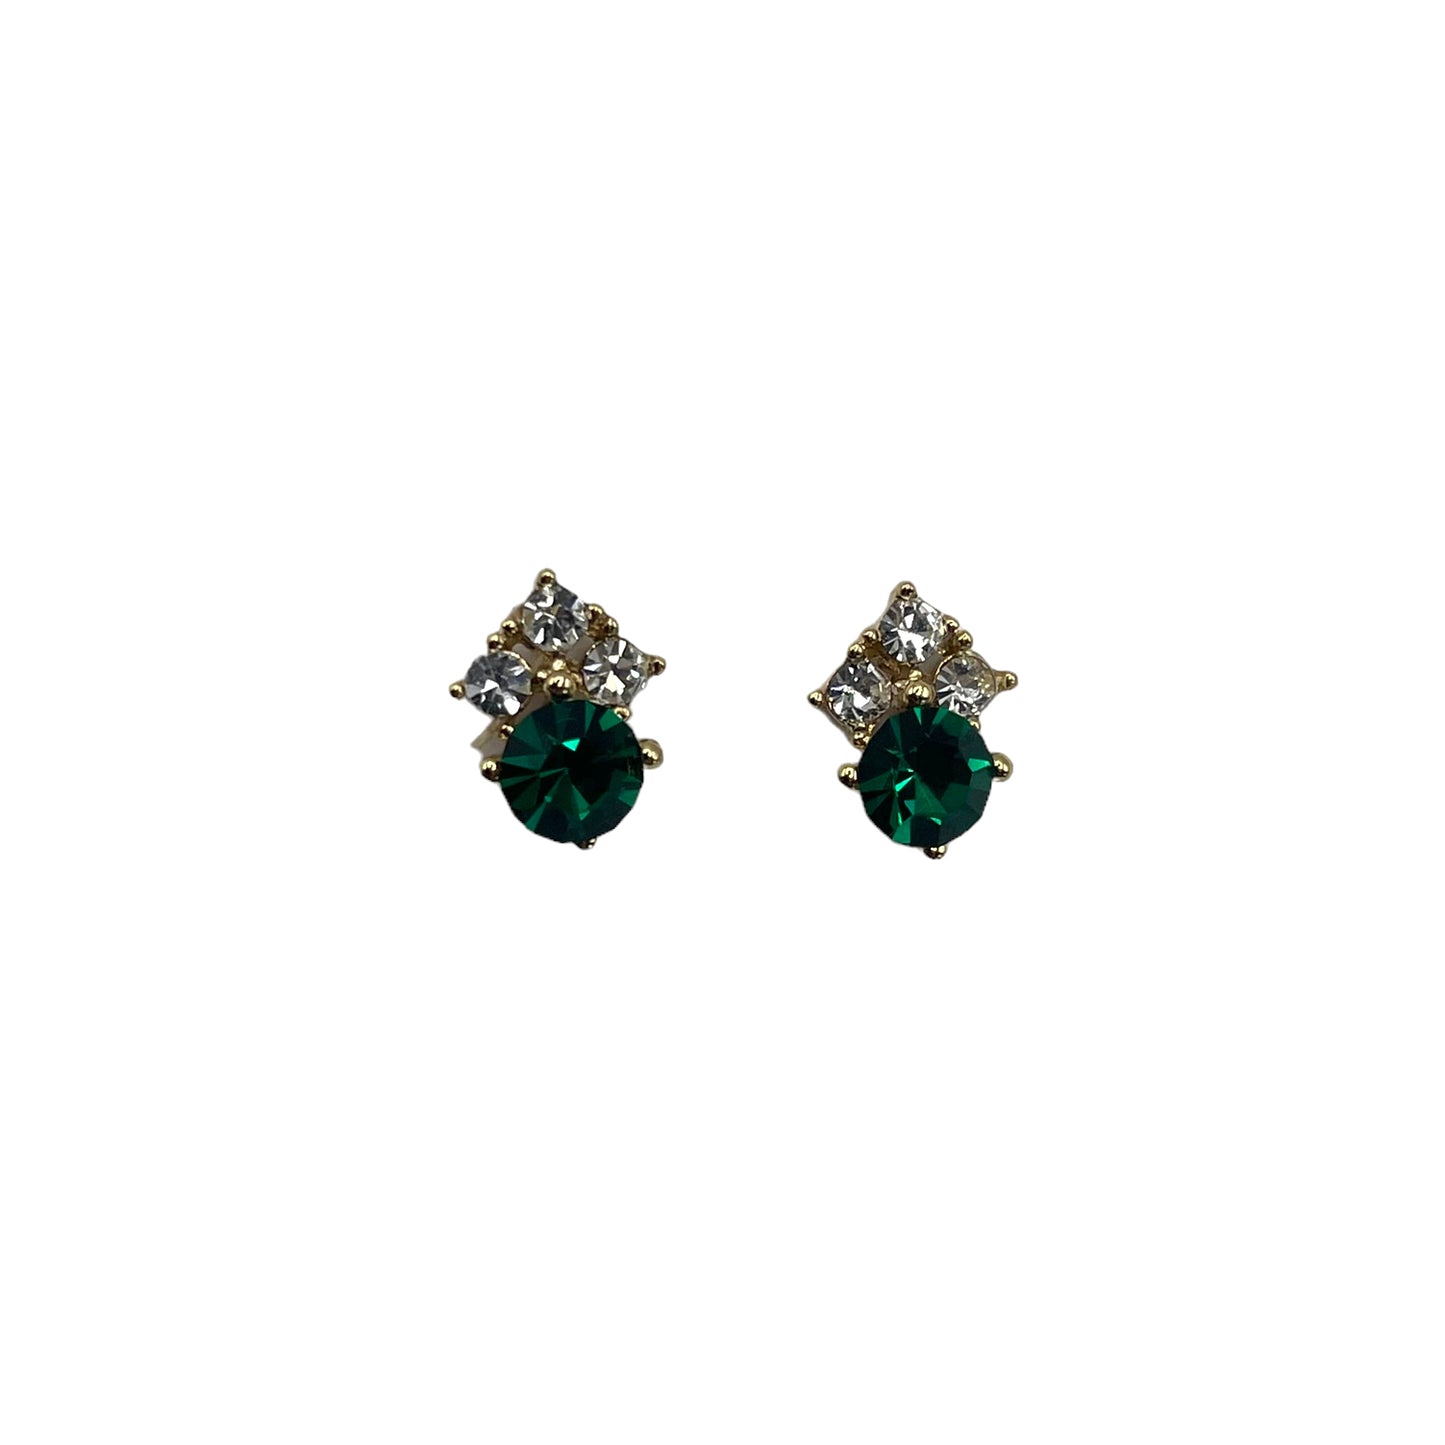 Vintage style emerald stud earrings